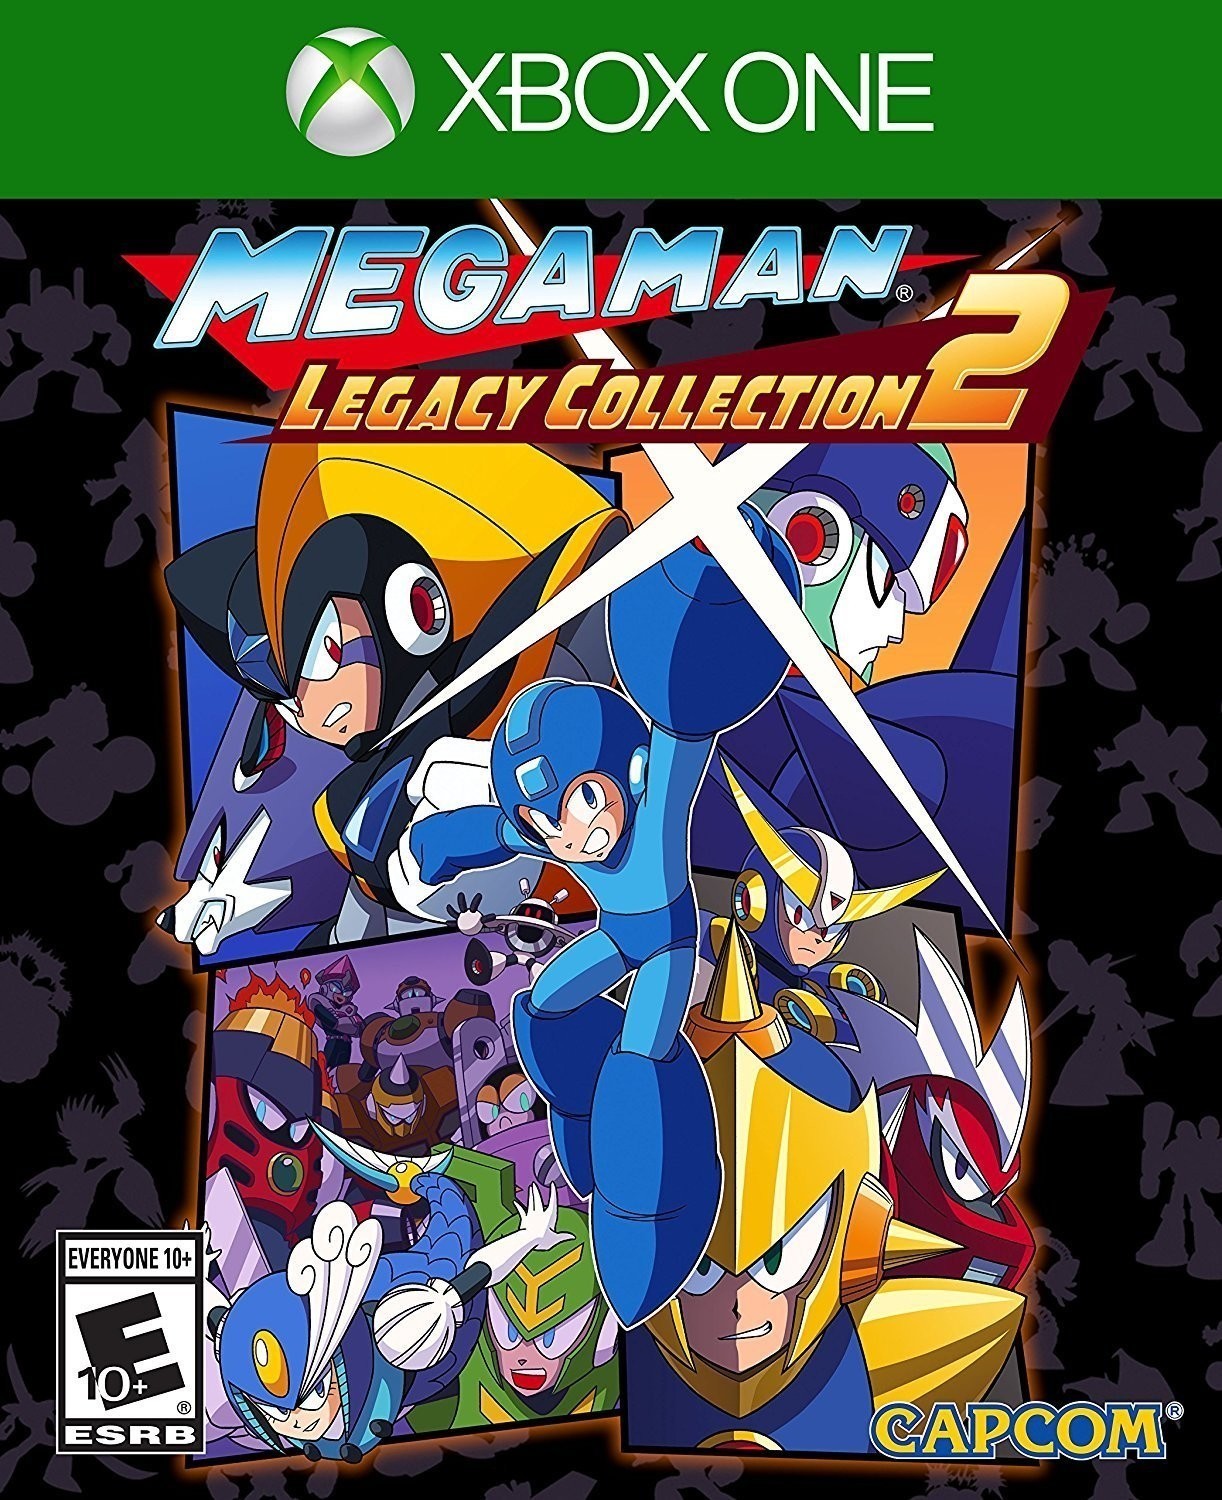 Mega Man Legacy Collection 2 (USA Import) (Xbox One), Capcom